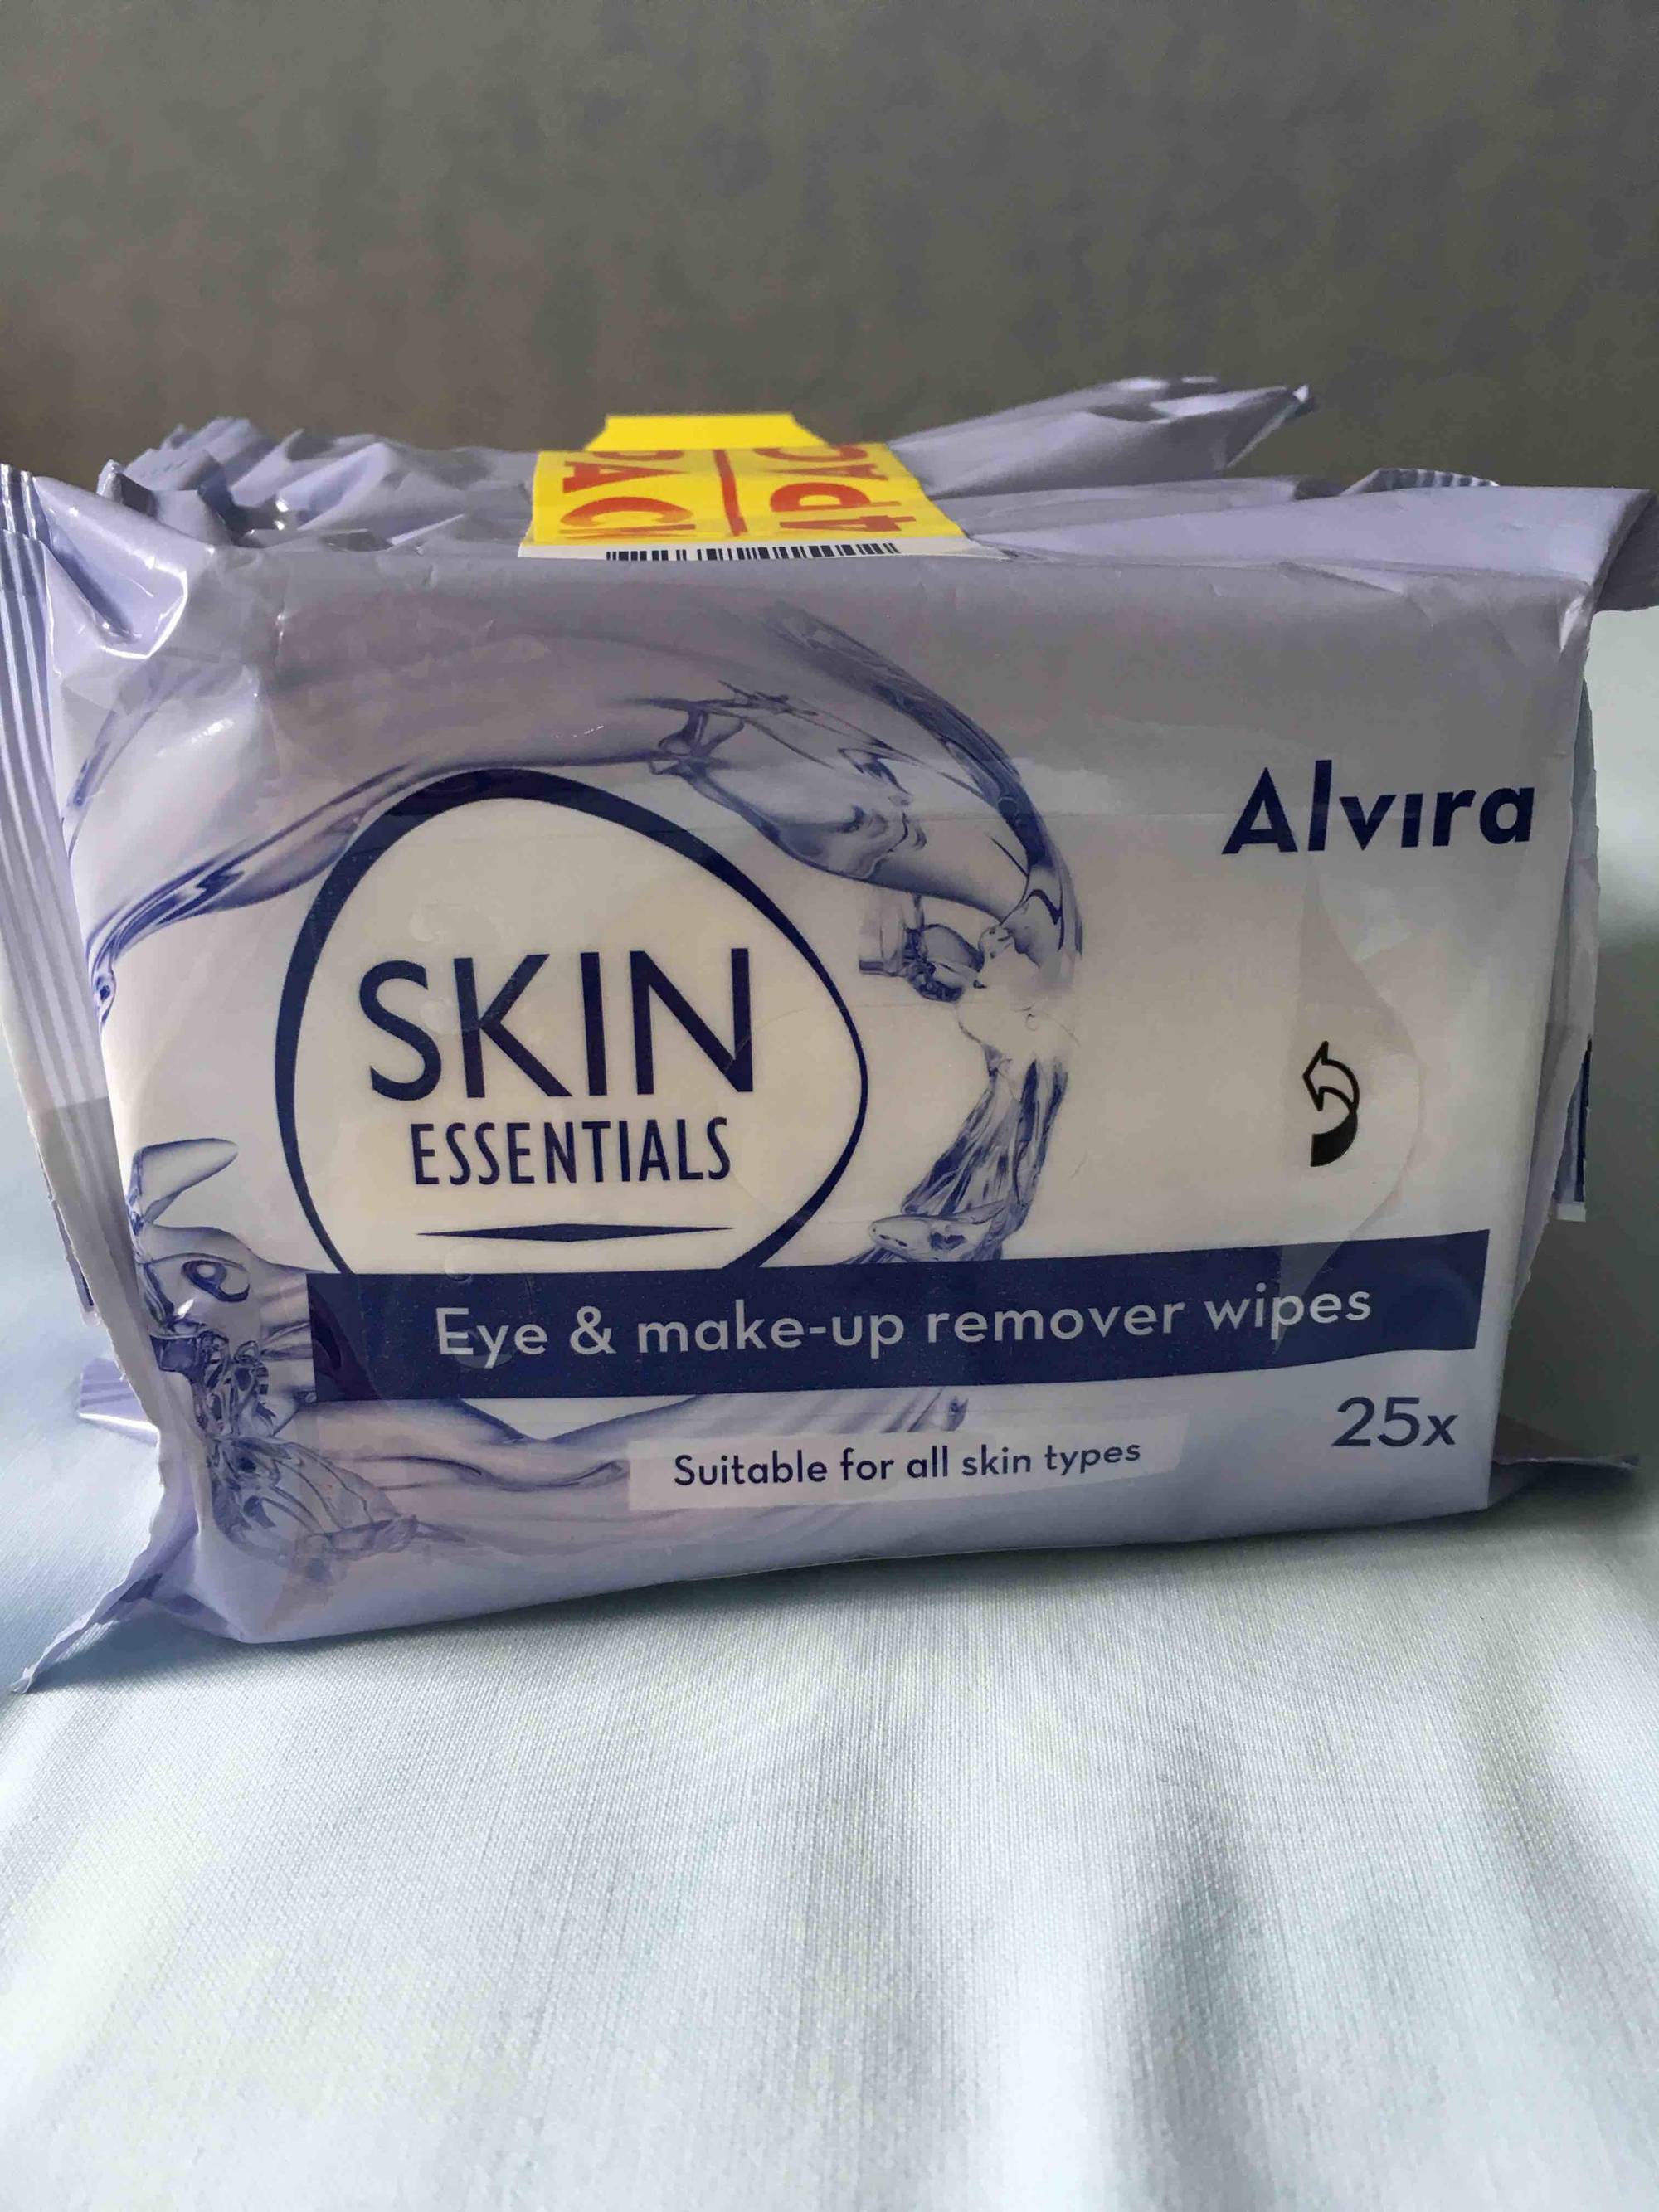 ALVIRA - Skin essentials - Eye & make-up remover wipes